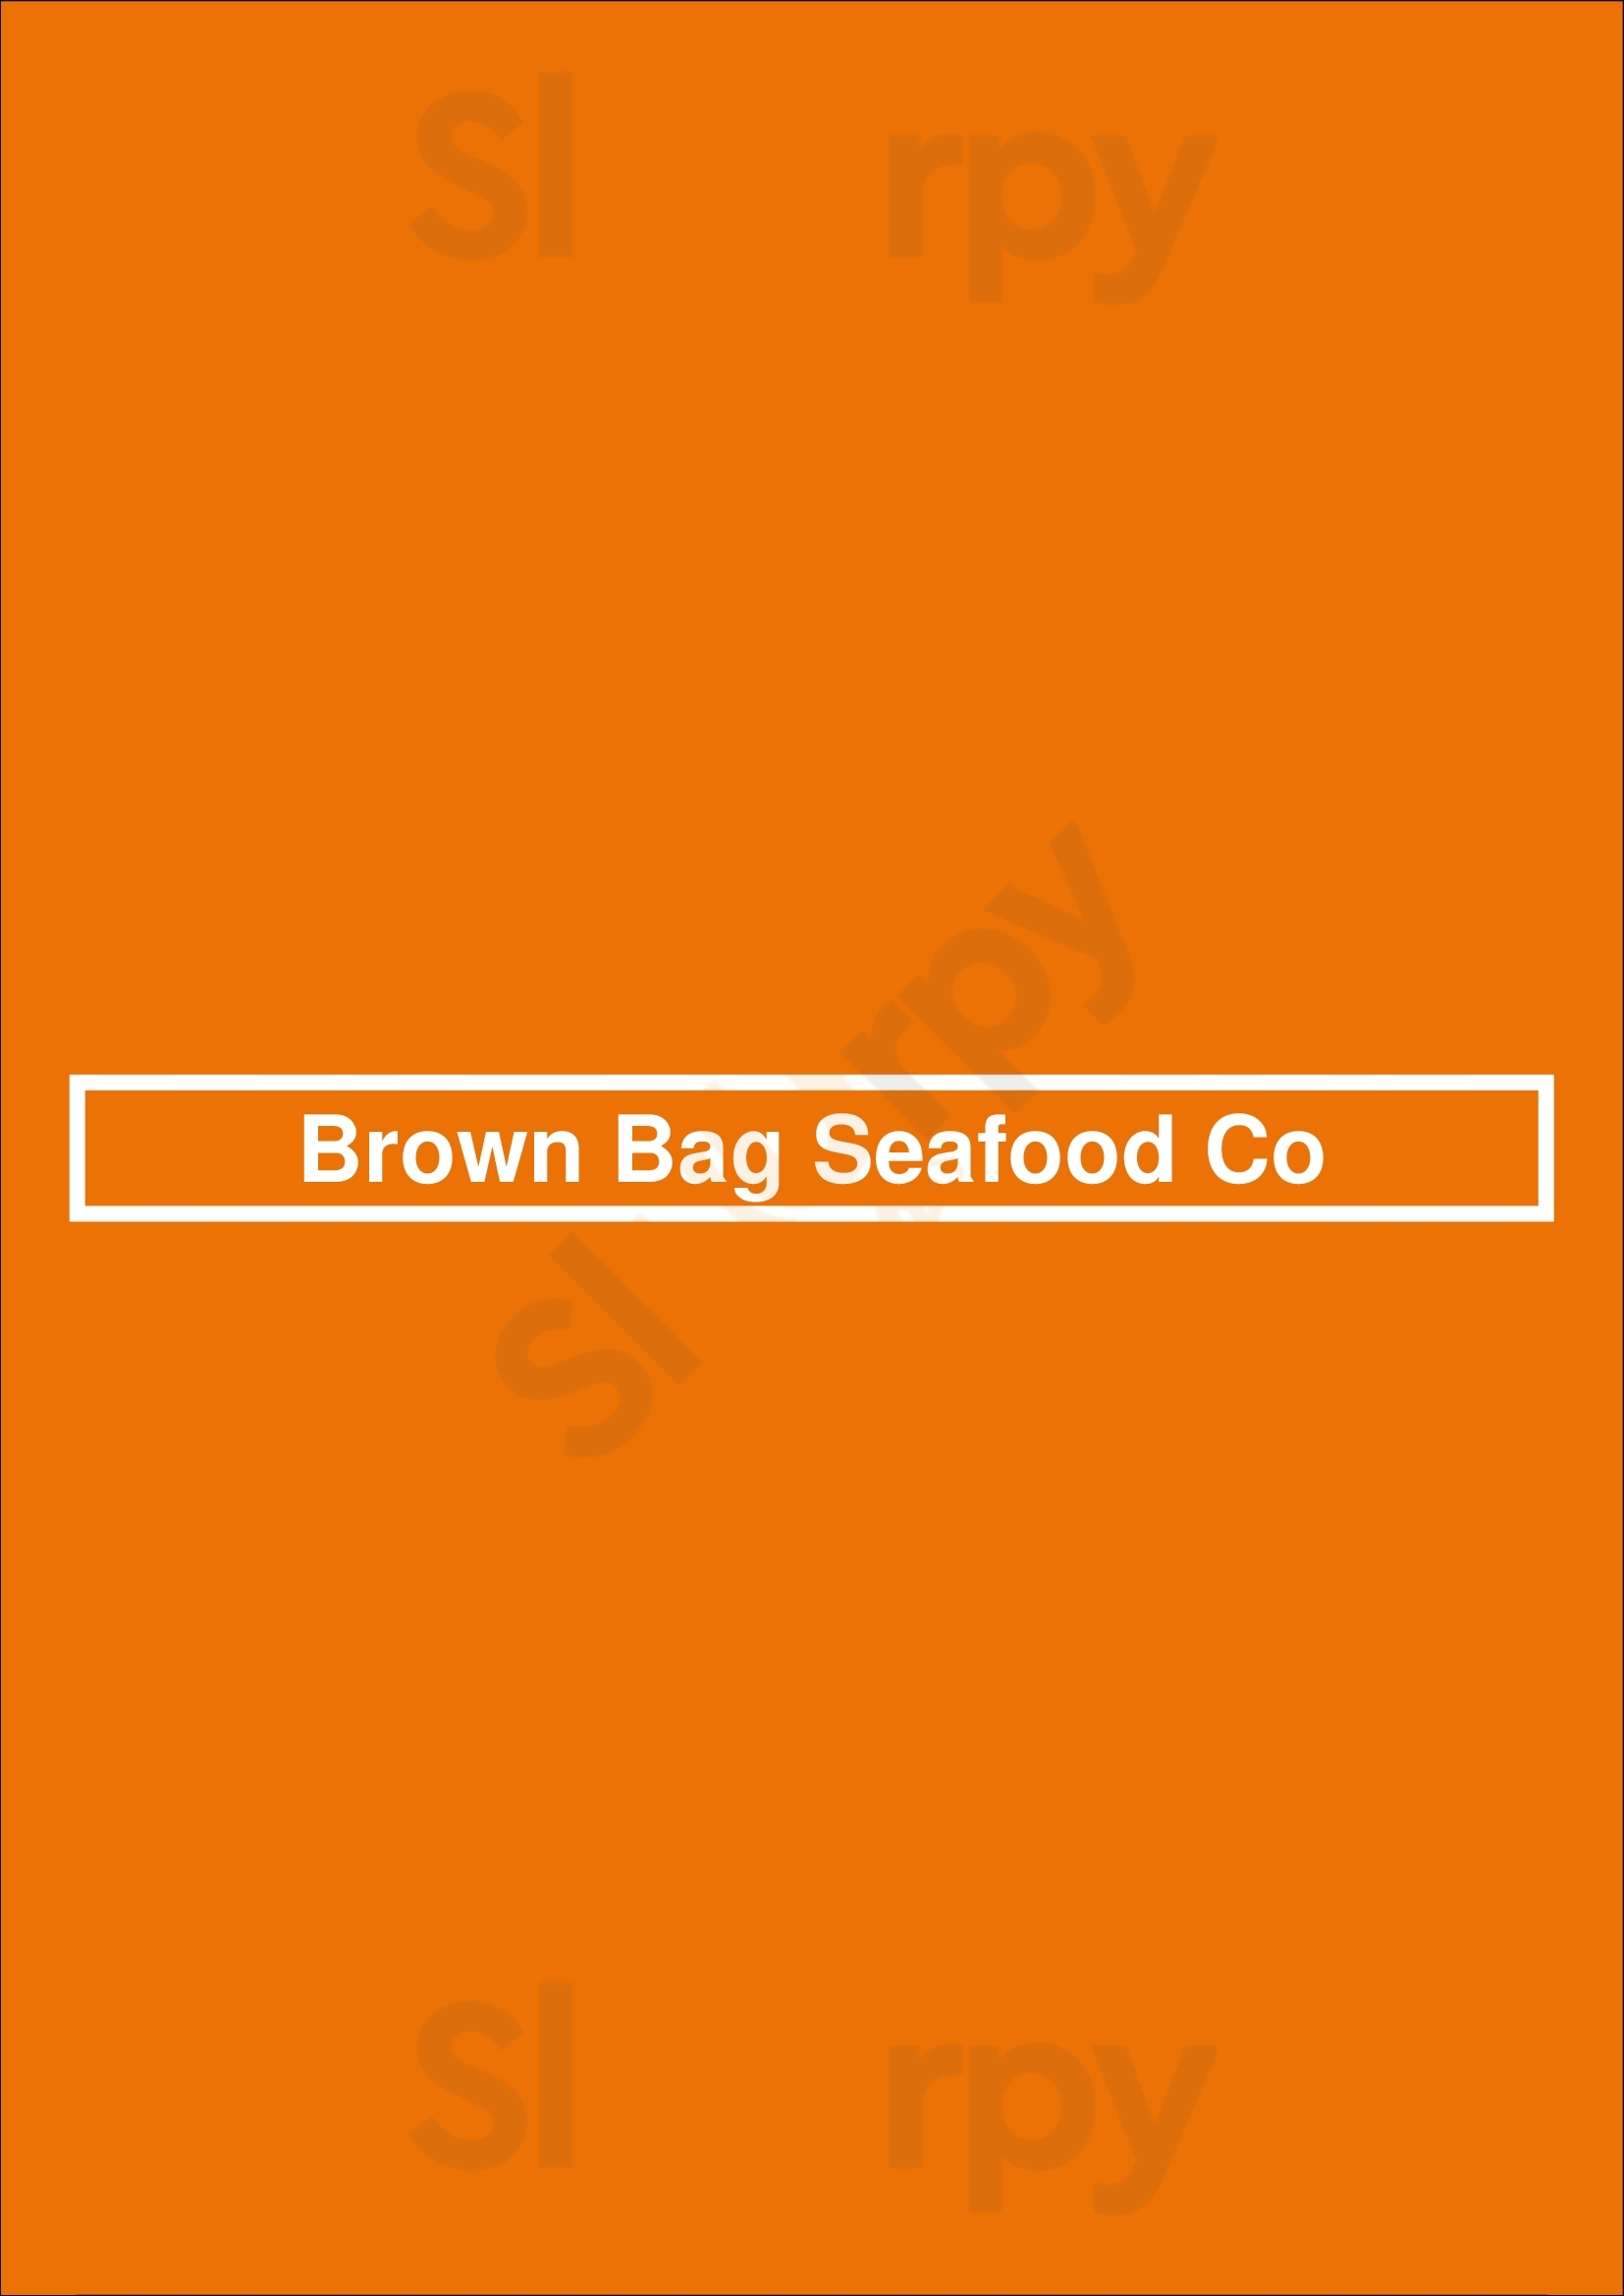 Brown Bag Seafood Co. Chicago Menu - 1